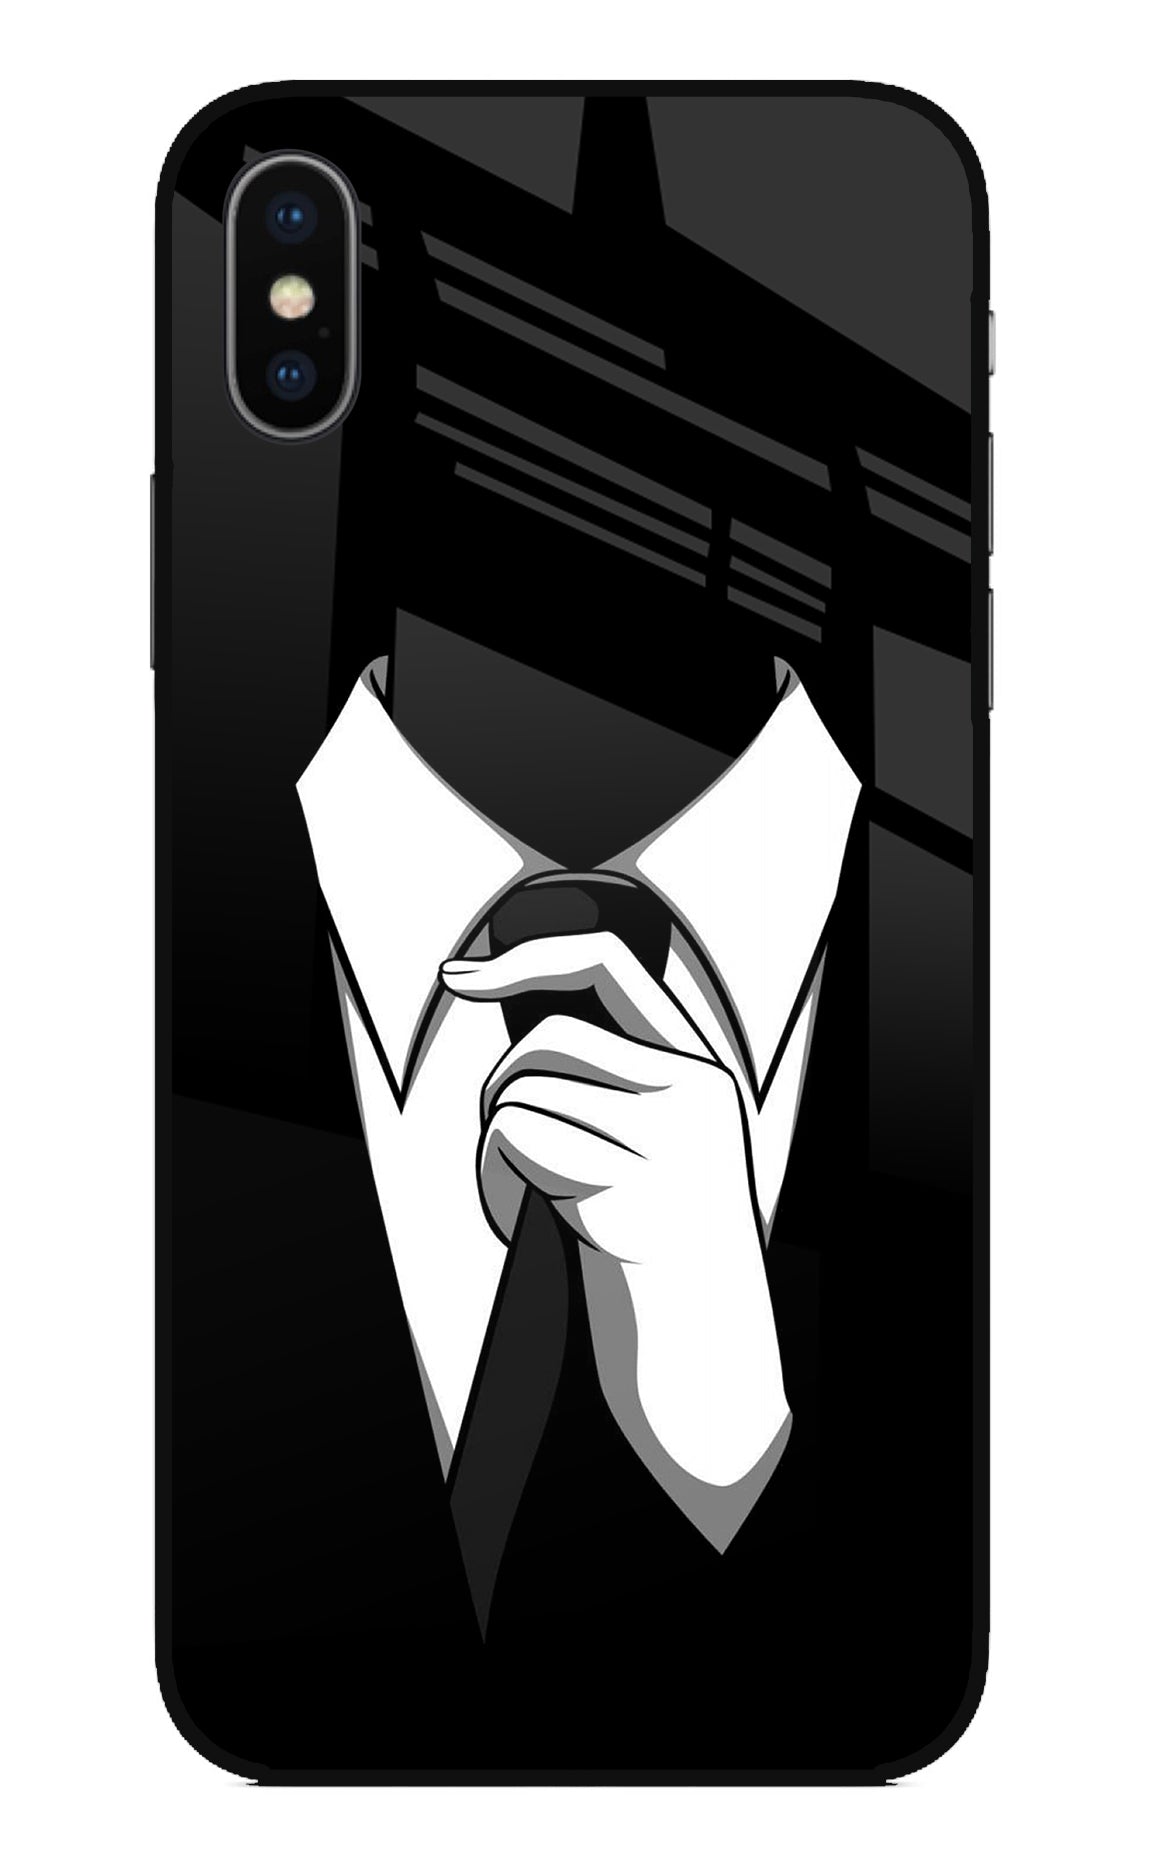 Black Tie iPhone XS Glass Case